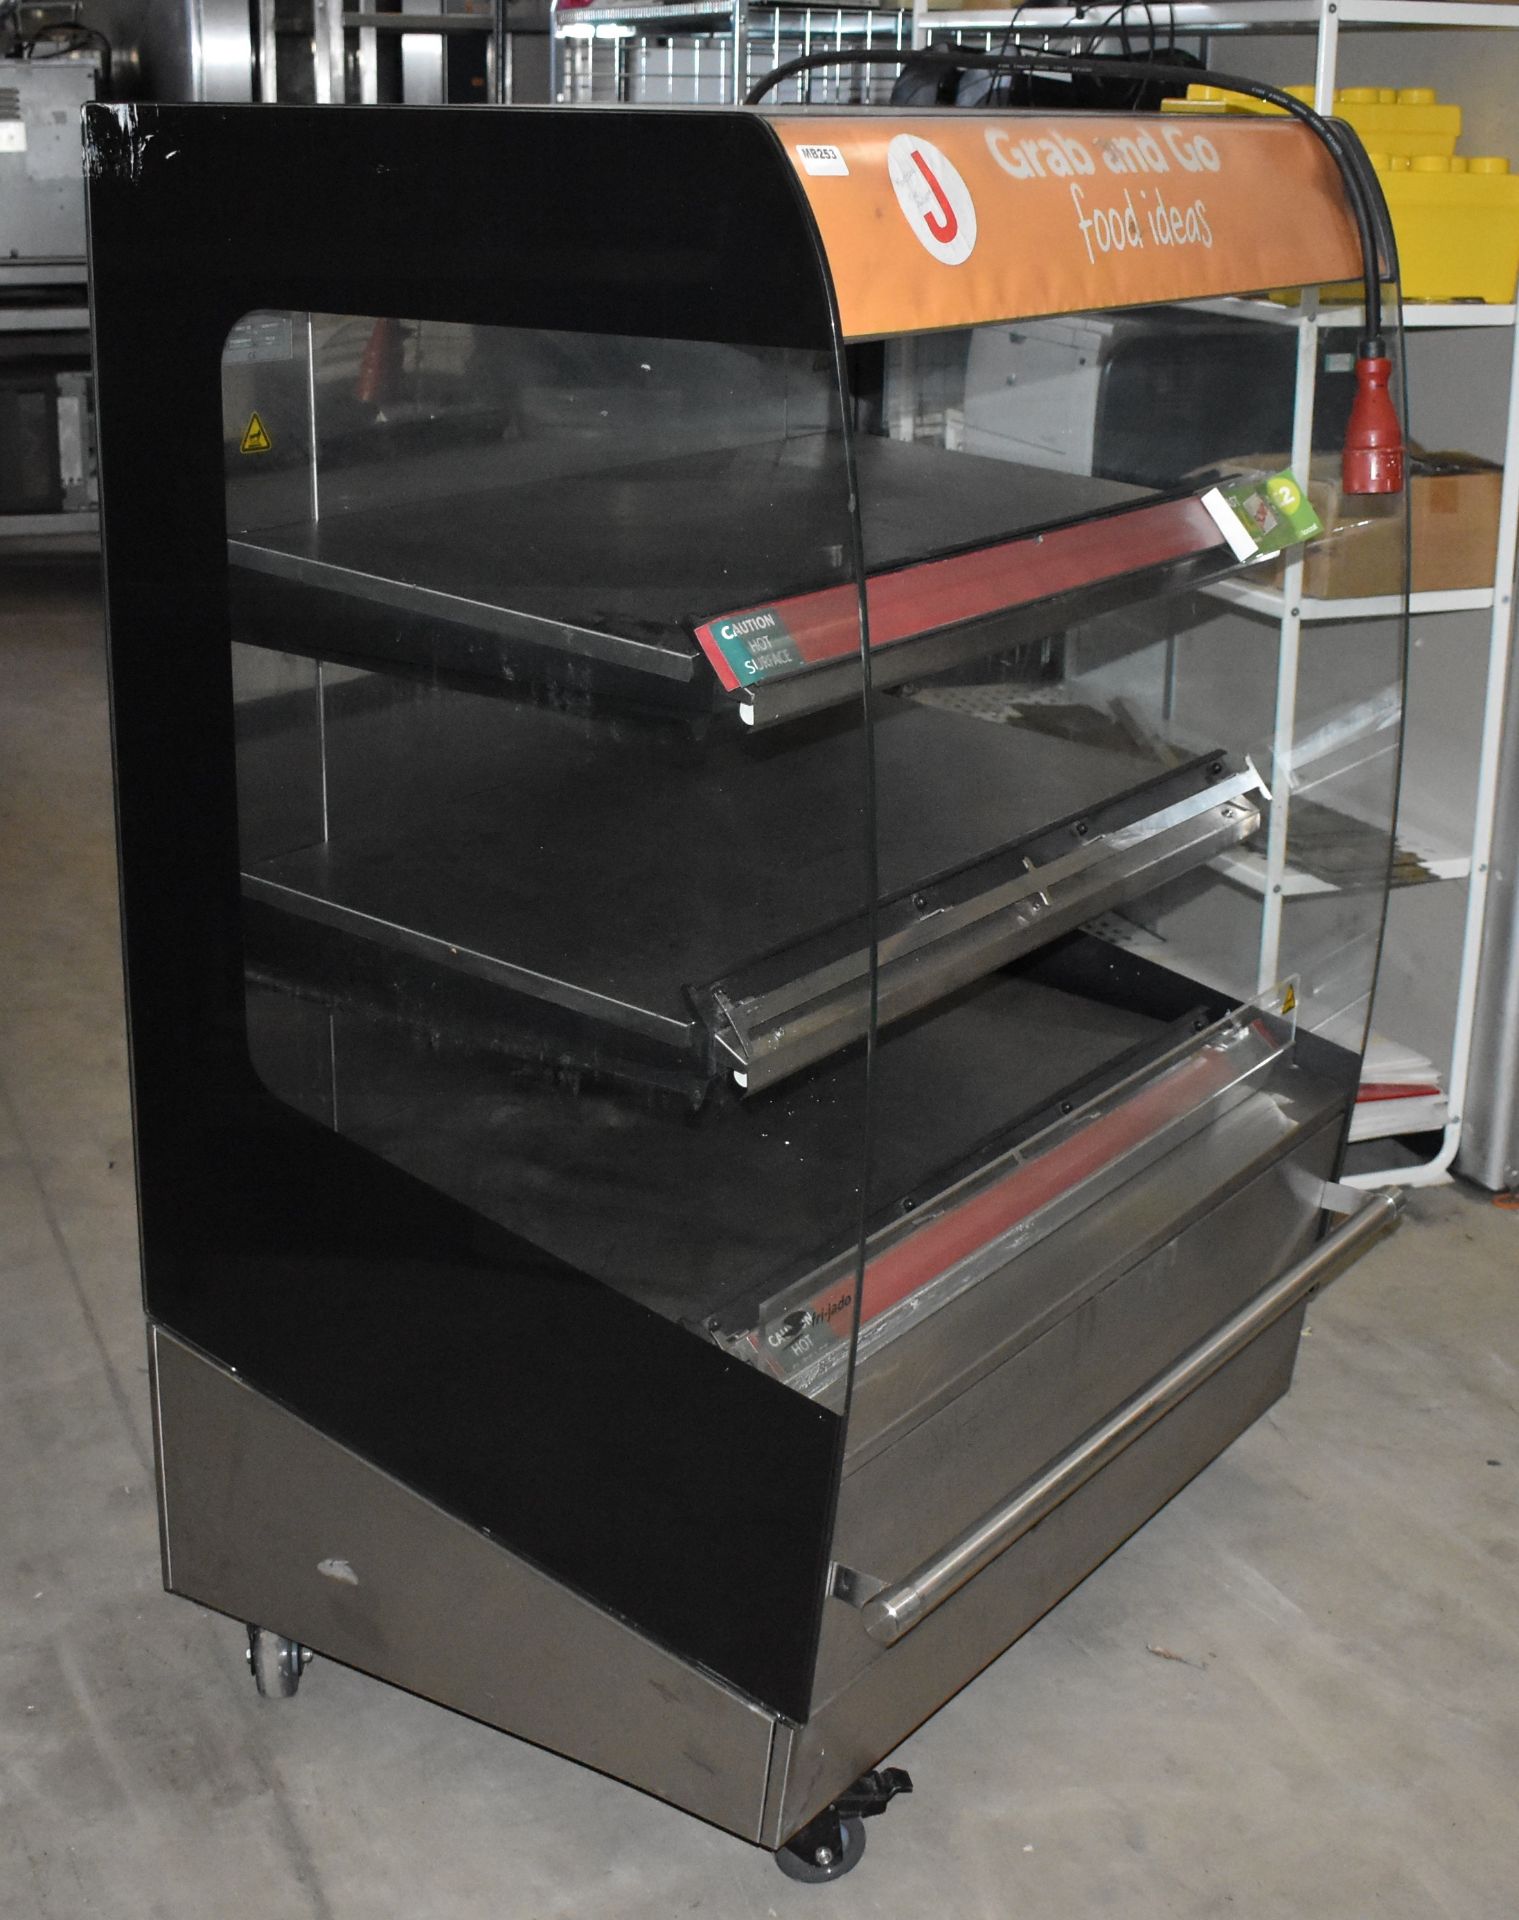 1 x Fri-Jado Three Tier Multi Deck Hot Food Warmer Heated Display Unit - Contemporary Modern - Image 7 of 7